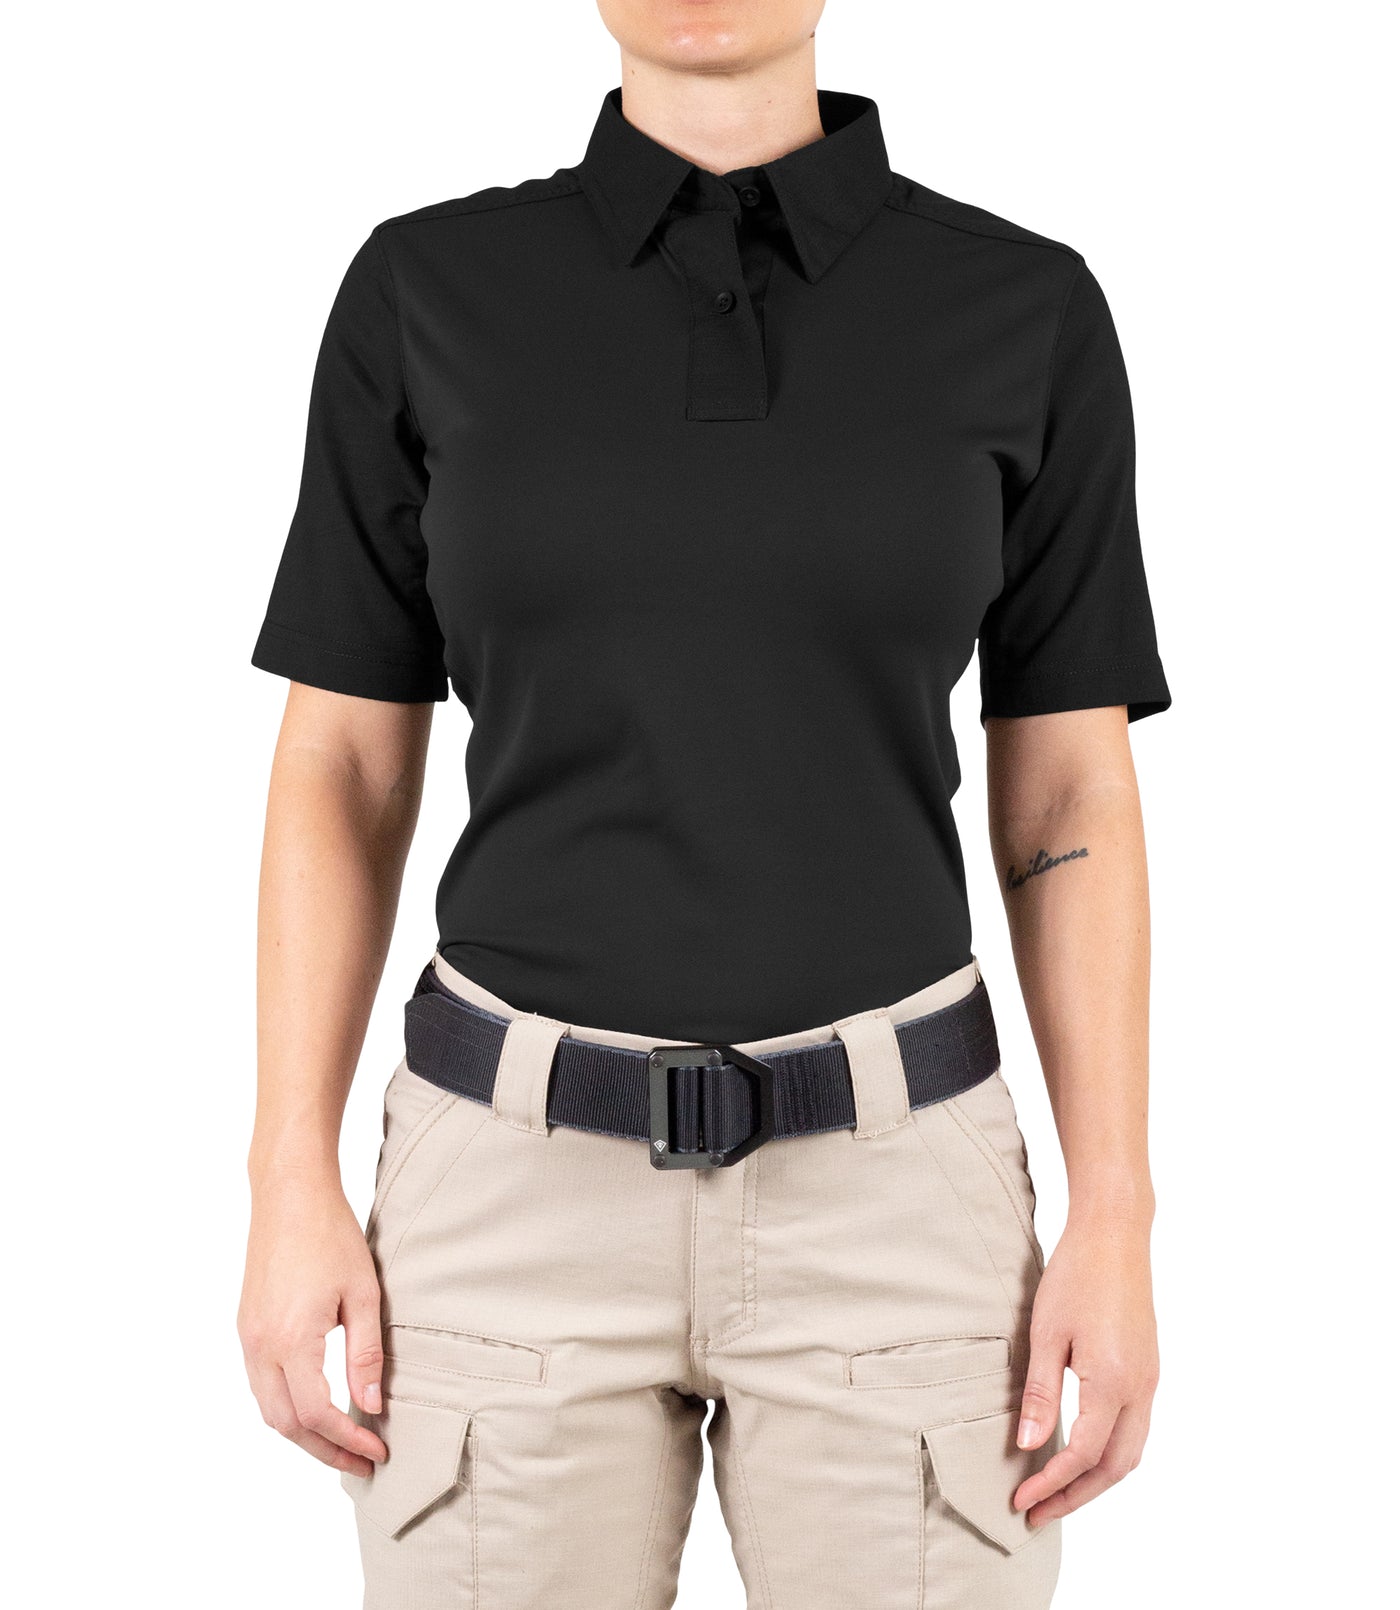 Front of Women's V2 Pro Performance Short Sleeve Shirt in Black